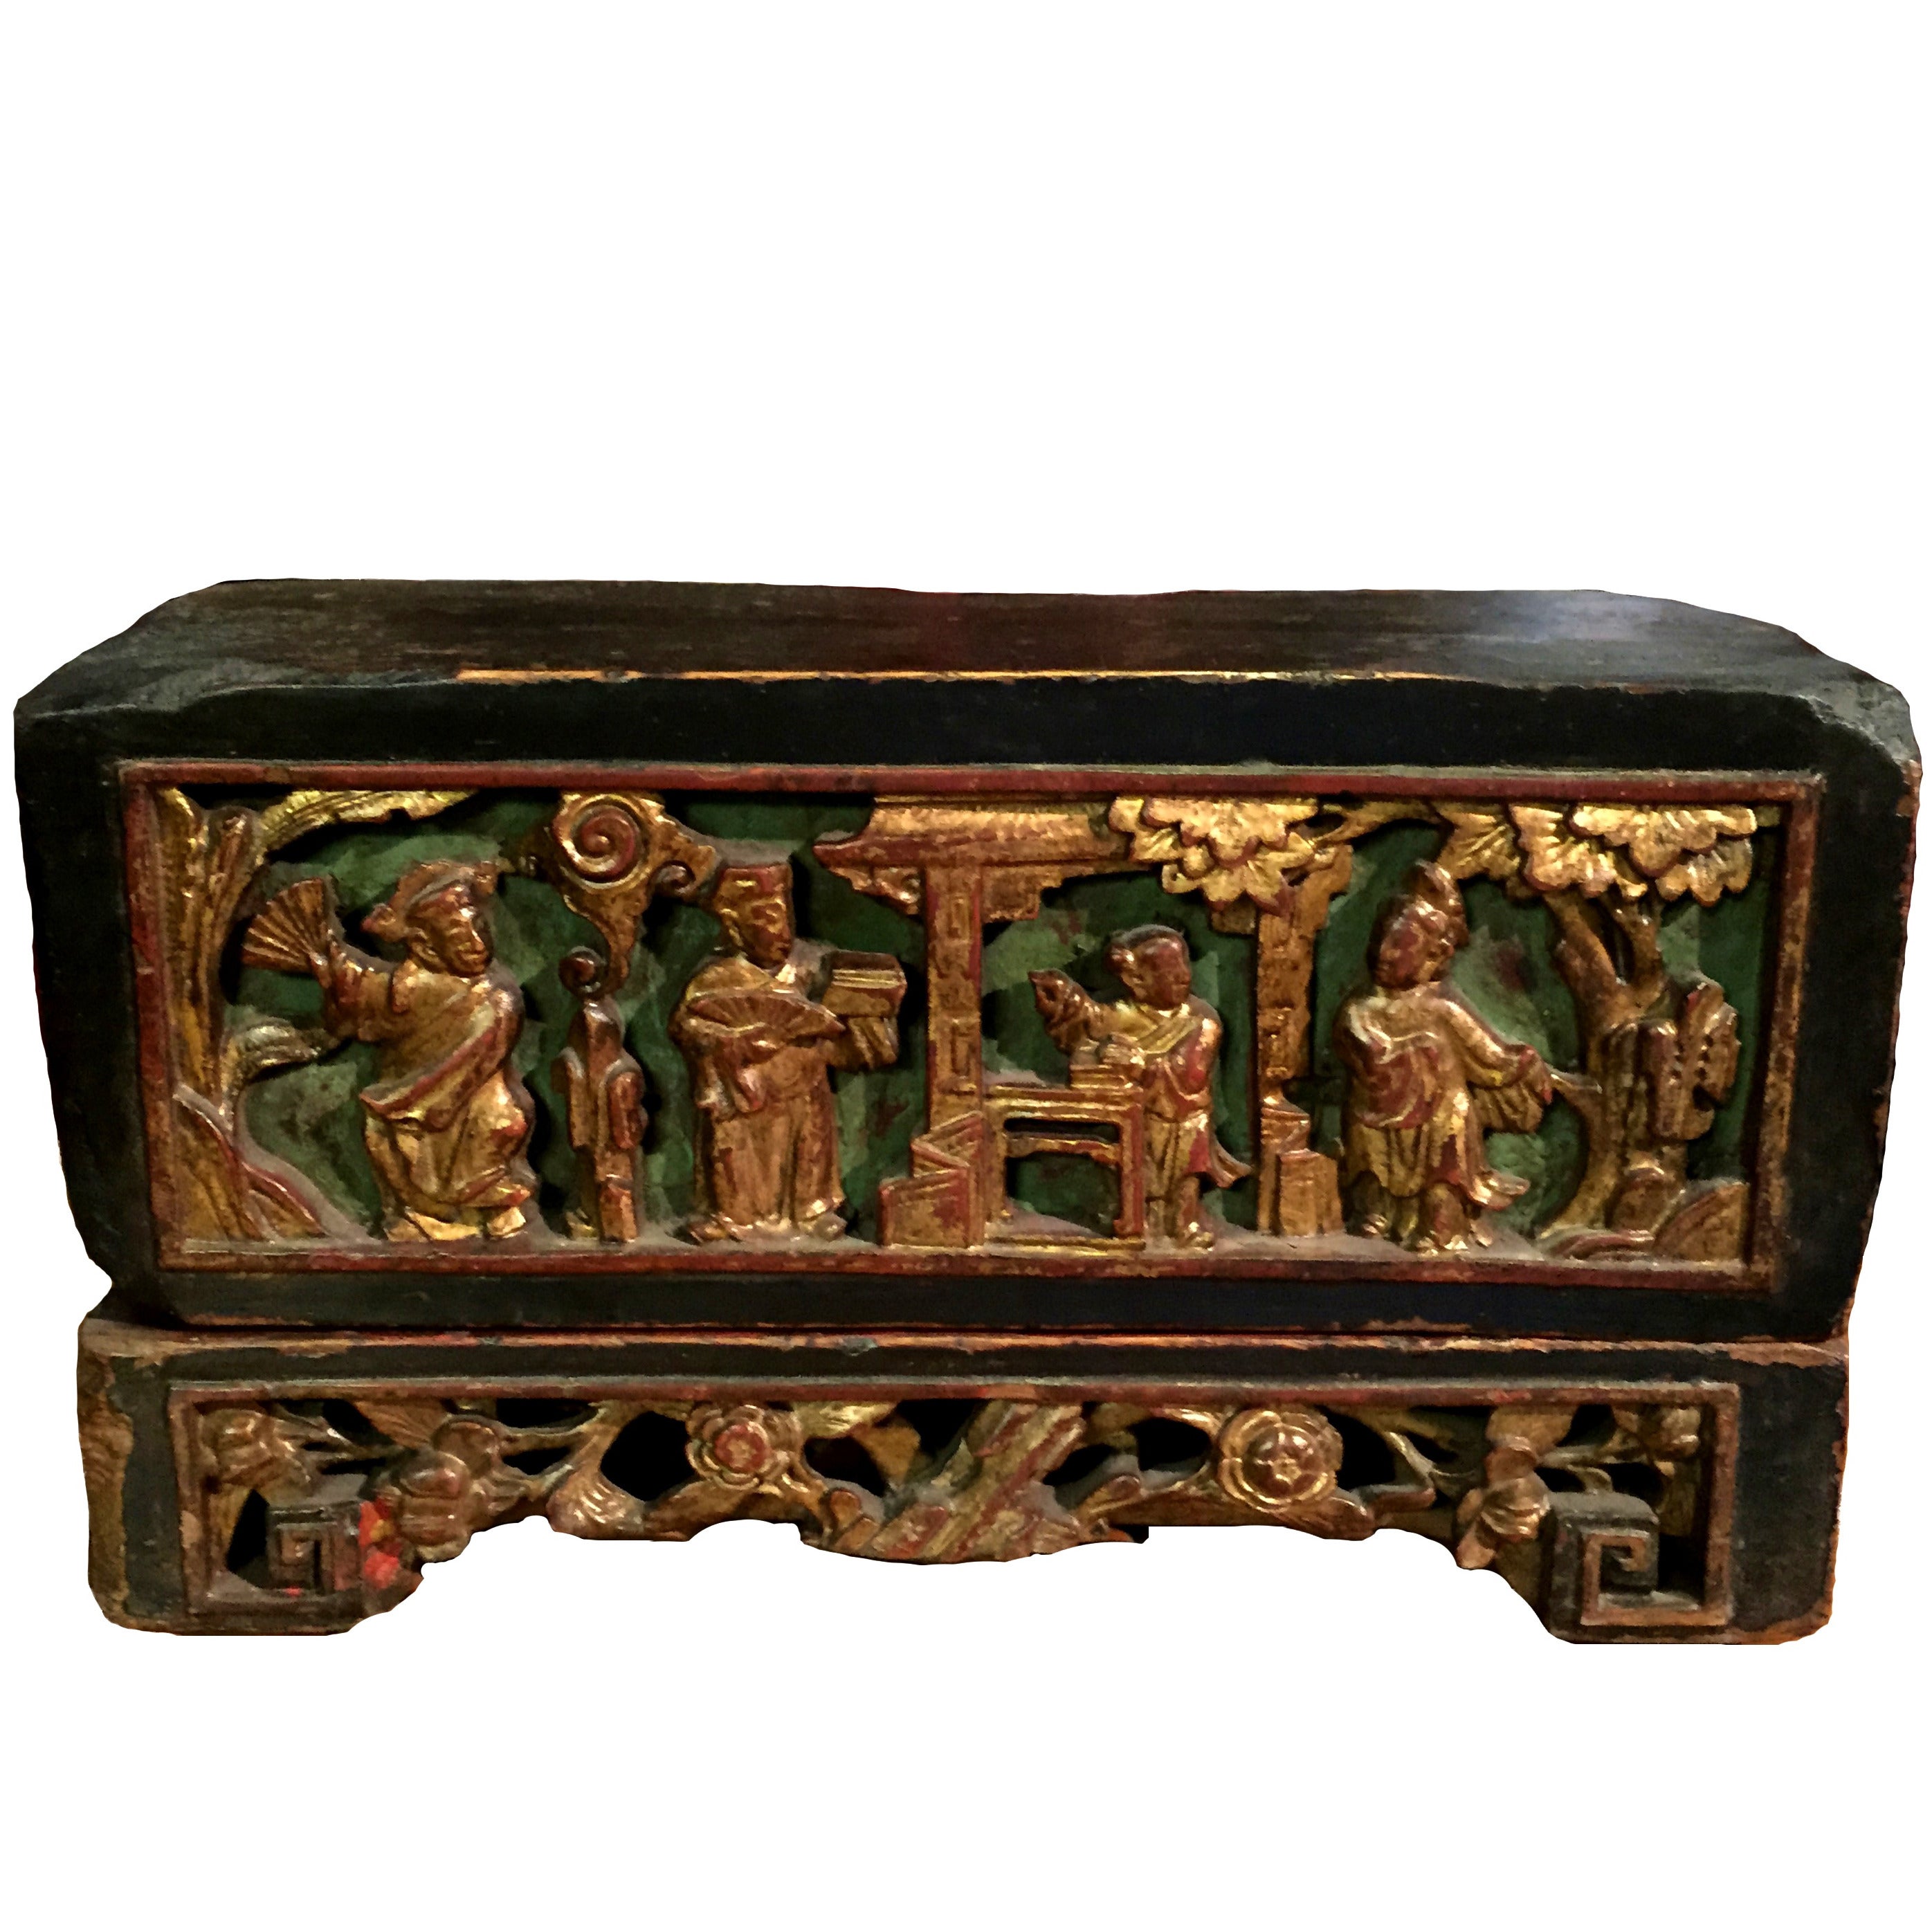 Chinese Antique Jewelry Box, 19th Century